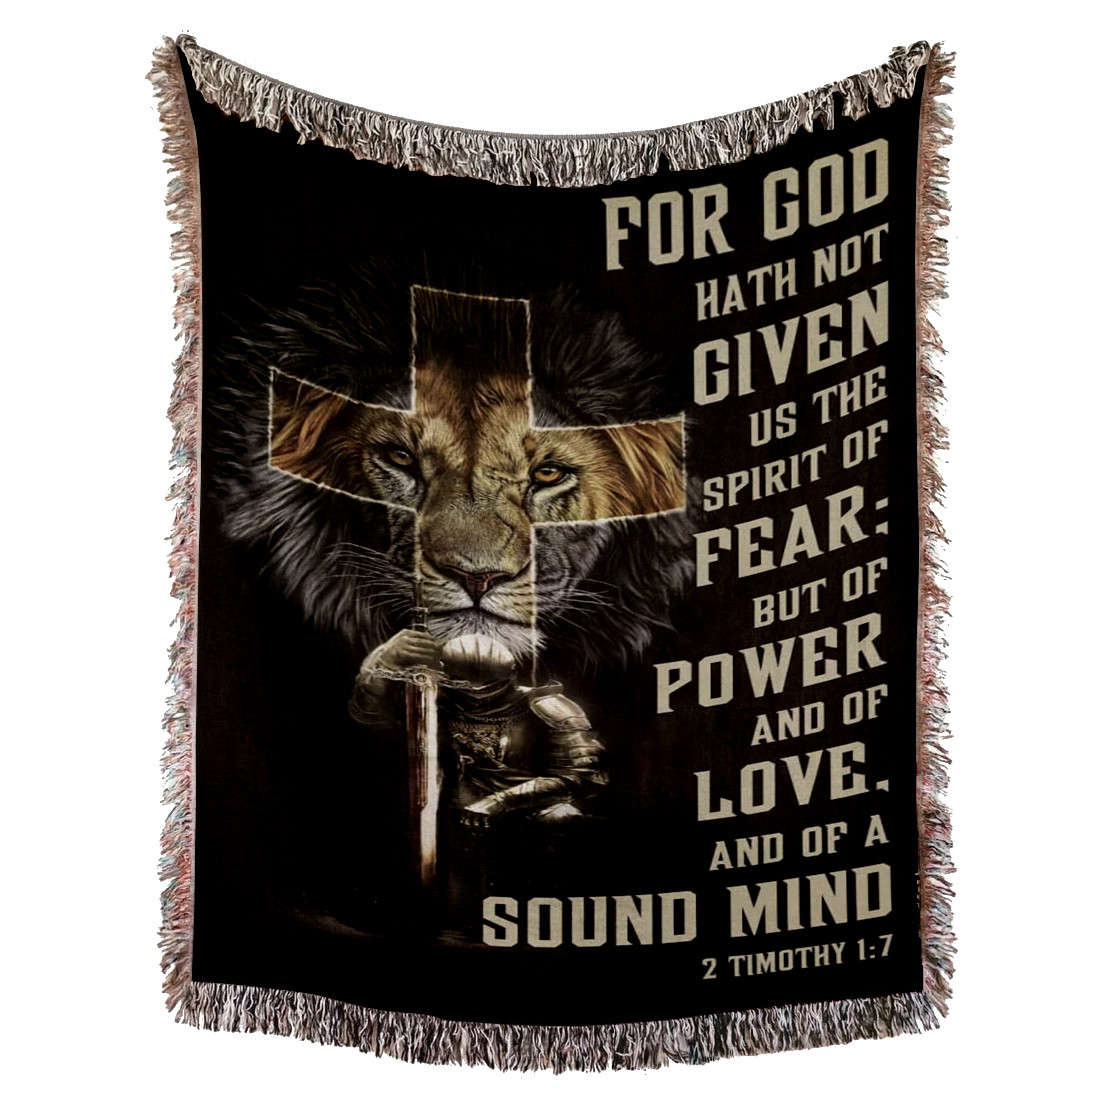 For God Hath Not Given Us The Spirit Of Fear Woven Blanket - 2 Timothy 1:7 Christian Woven Blanket - Lion Warrior Christian Blanket